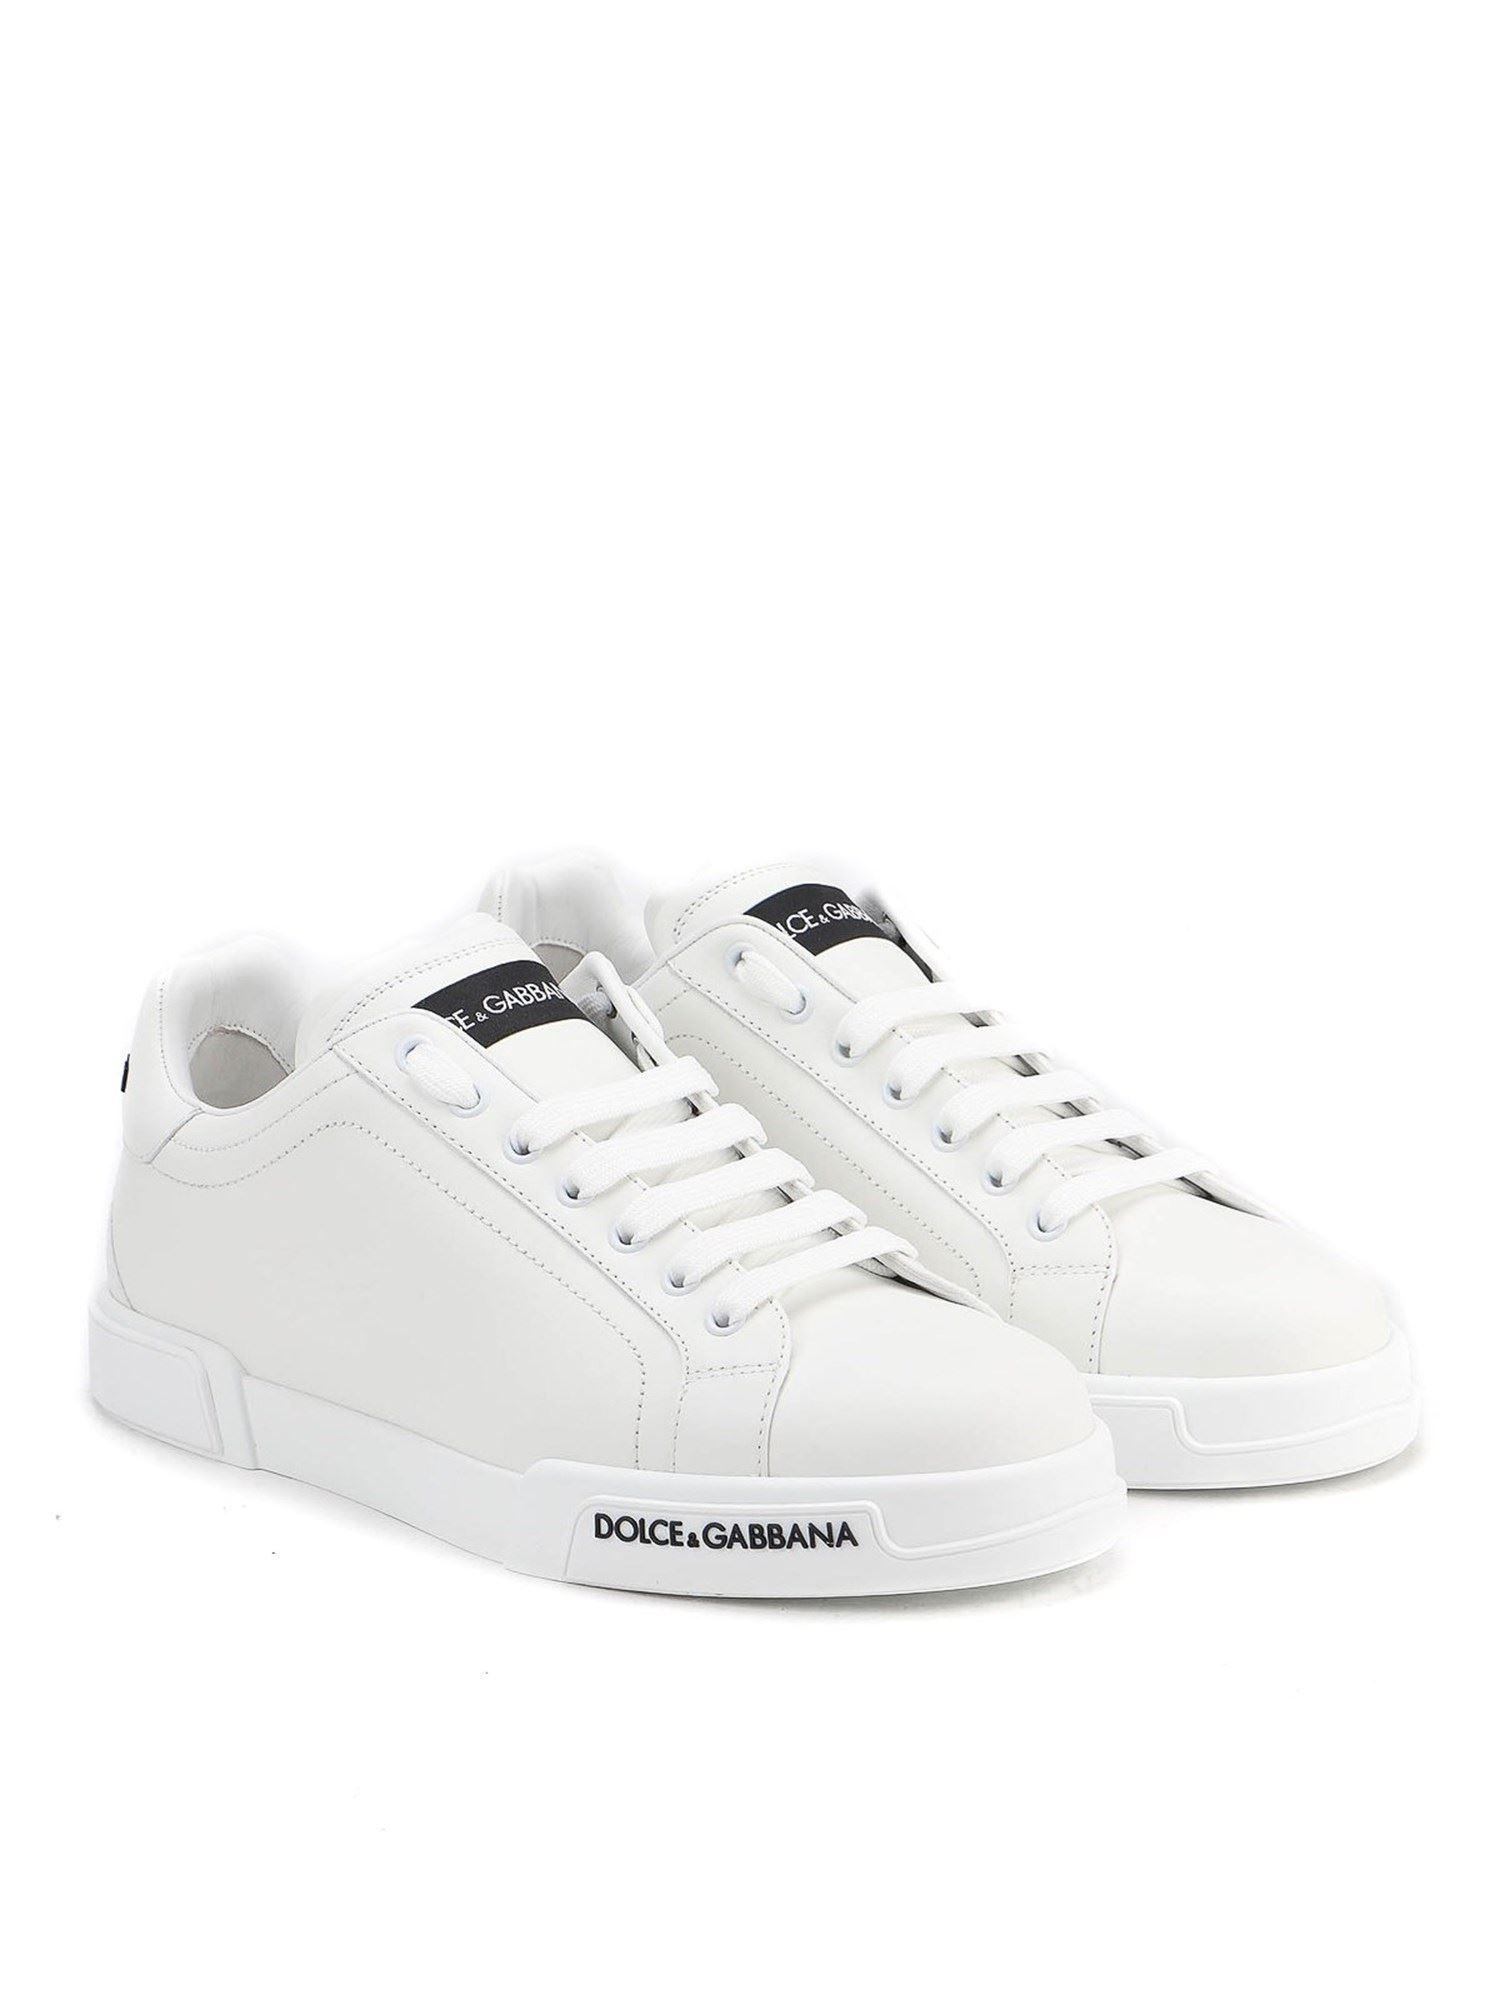 Dolce & Gabbana Sorrento Sneakers in White for Men - Lyst